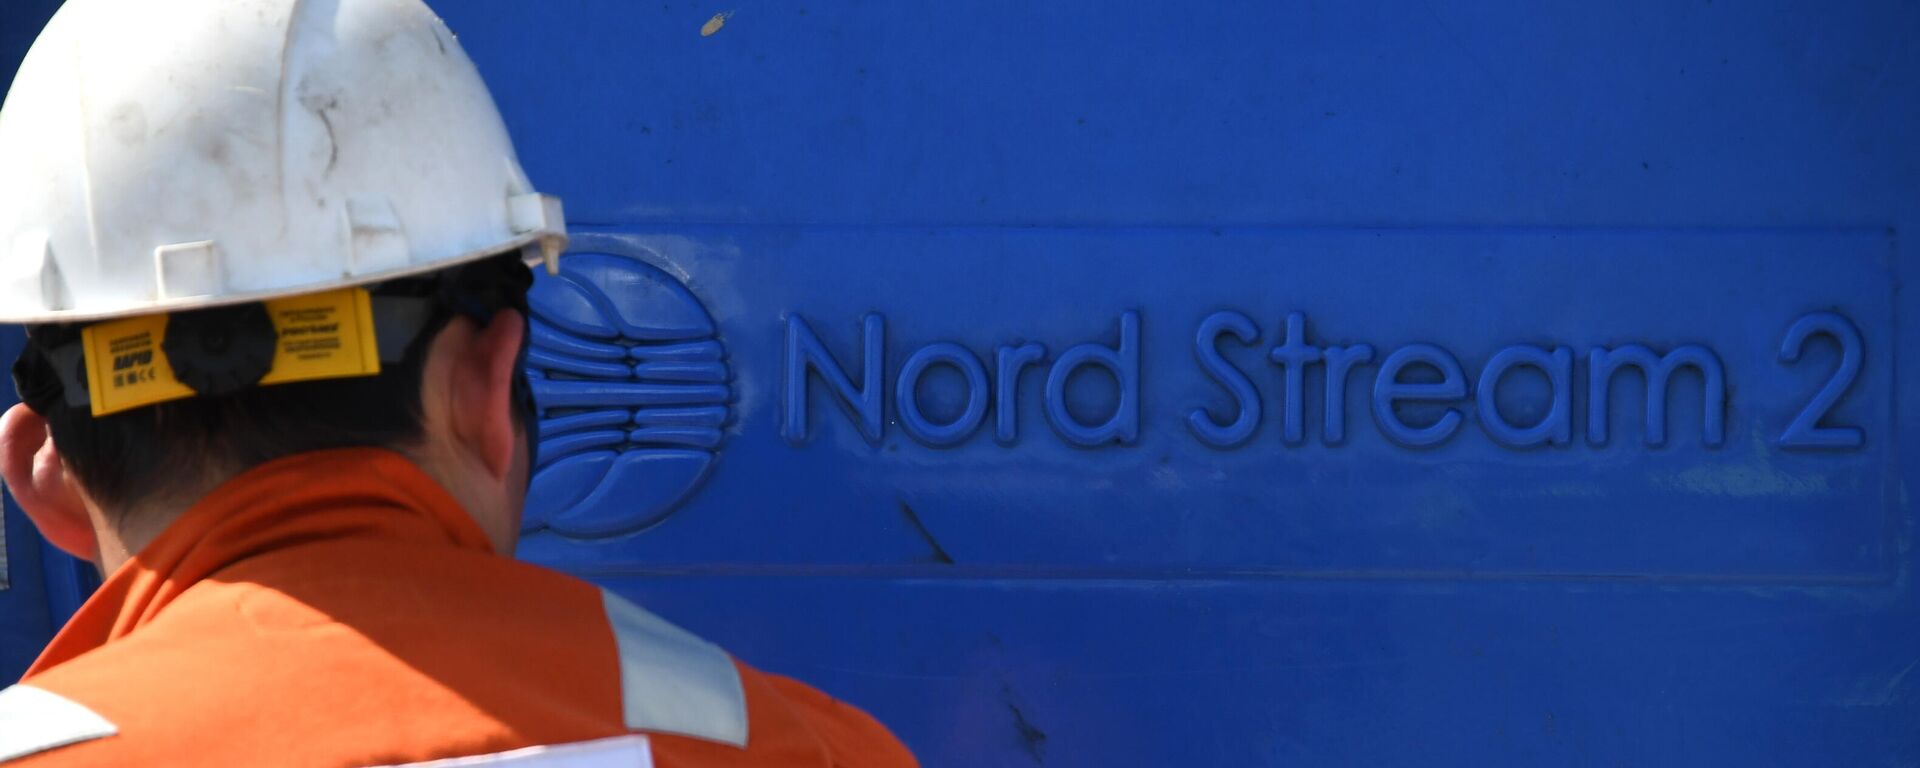 El Nord Stream 2 - Sputnik Mundo, 1920, 13.03.2023